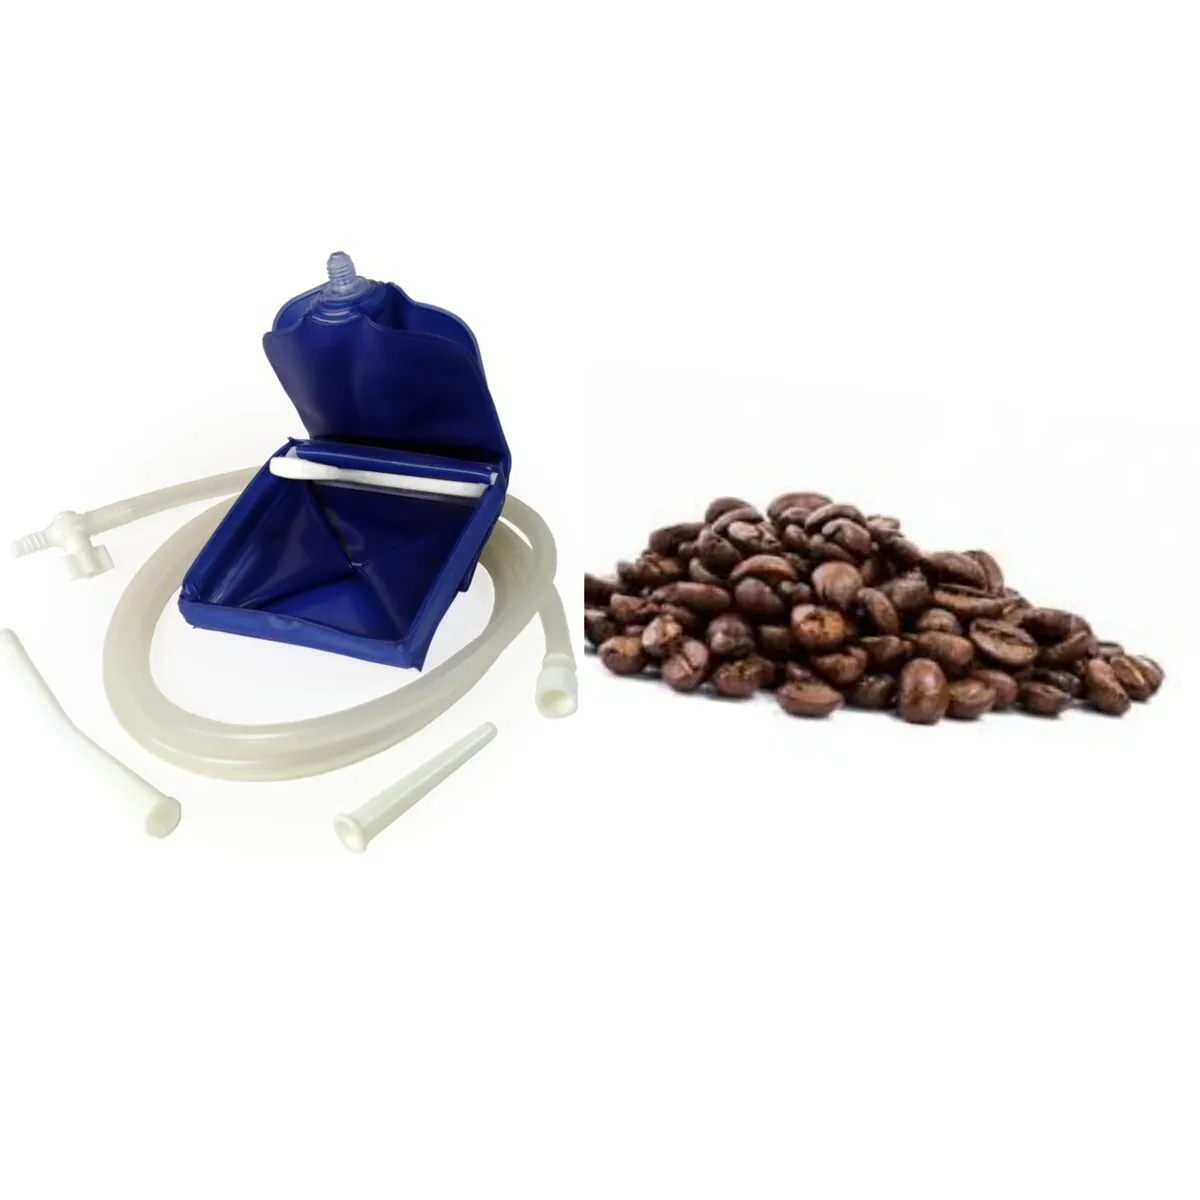 Coffee Enema Kit